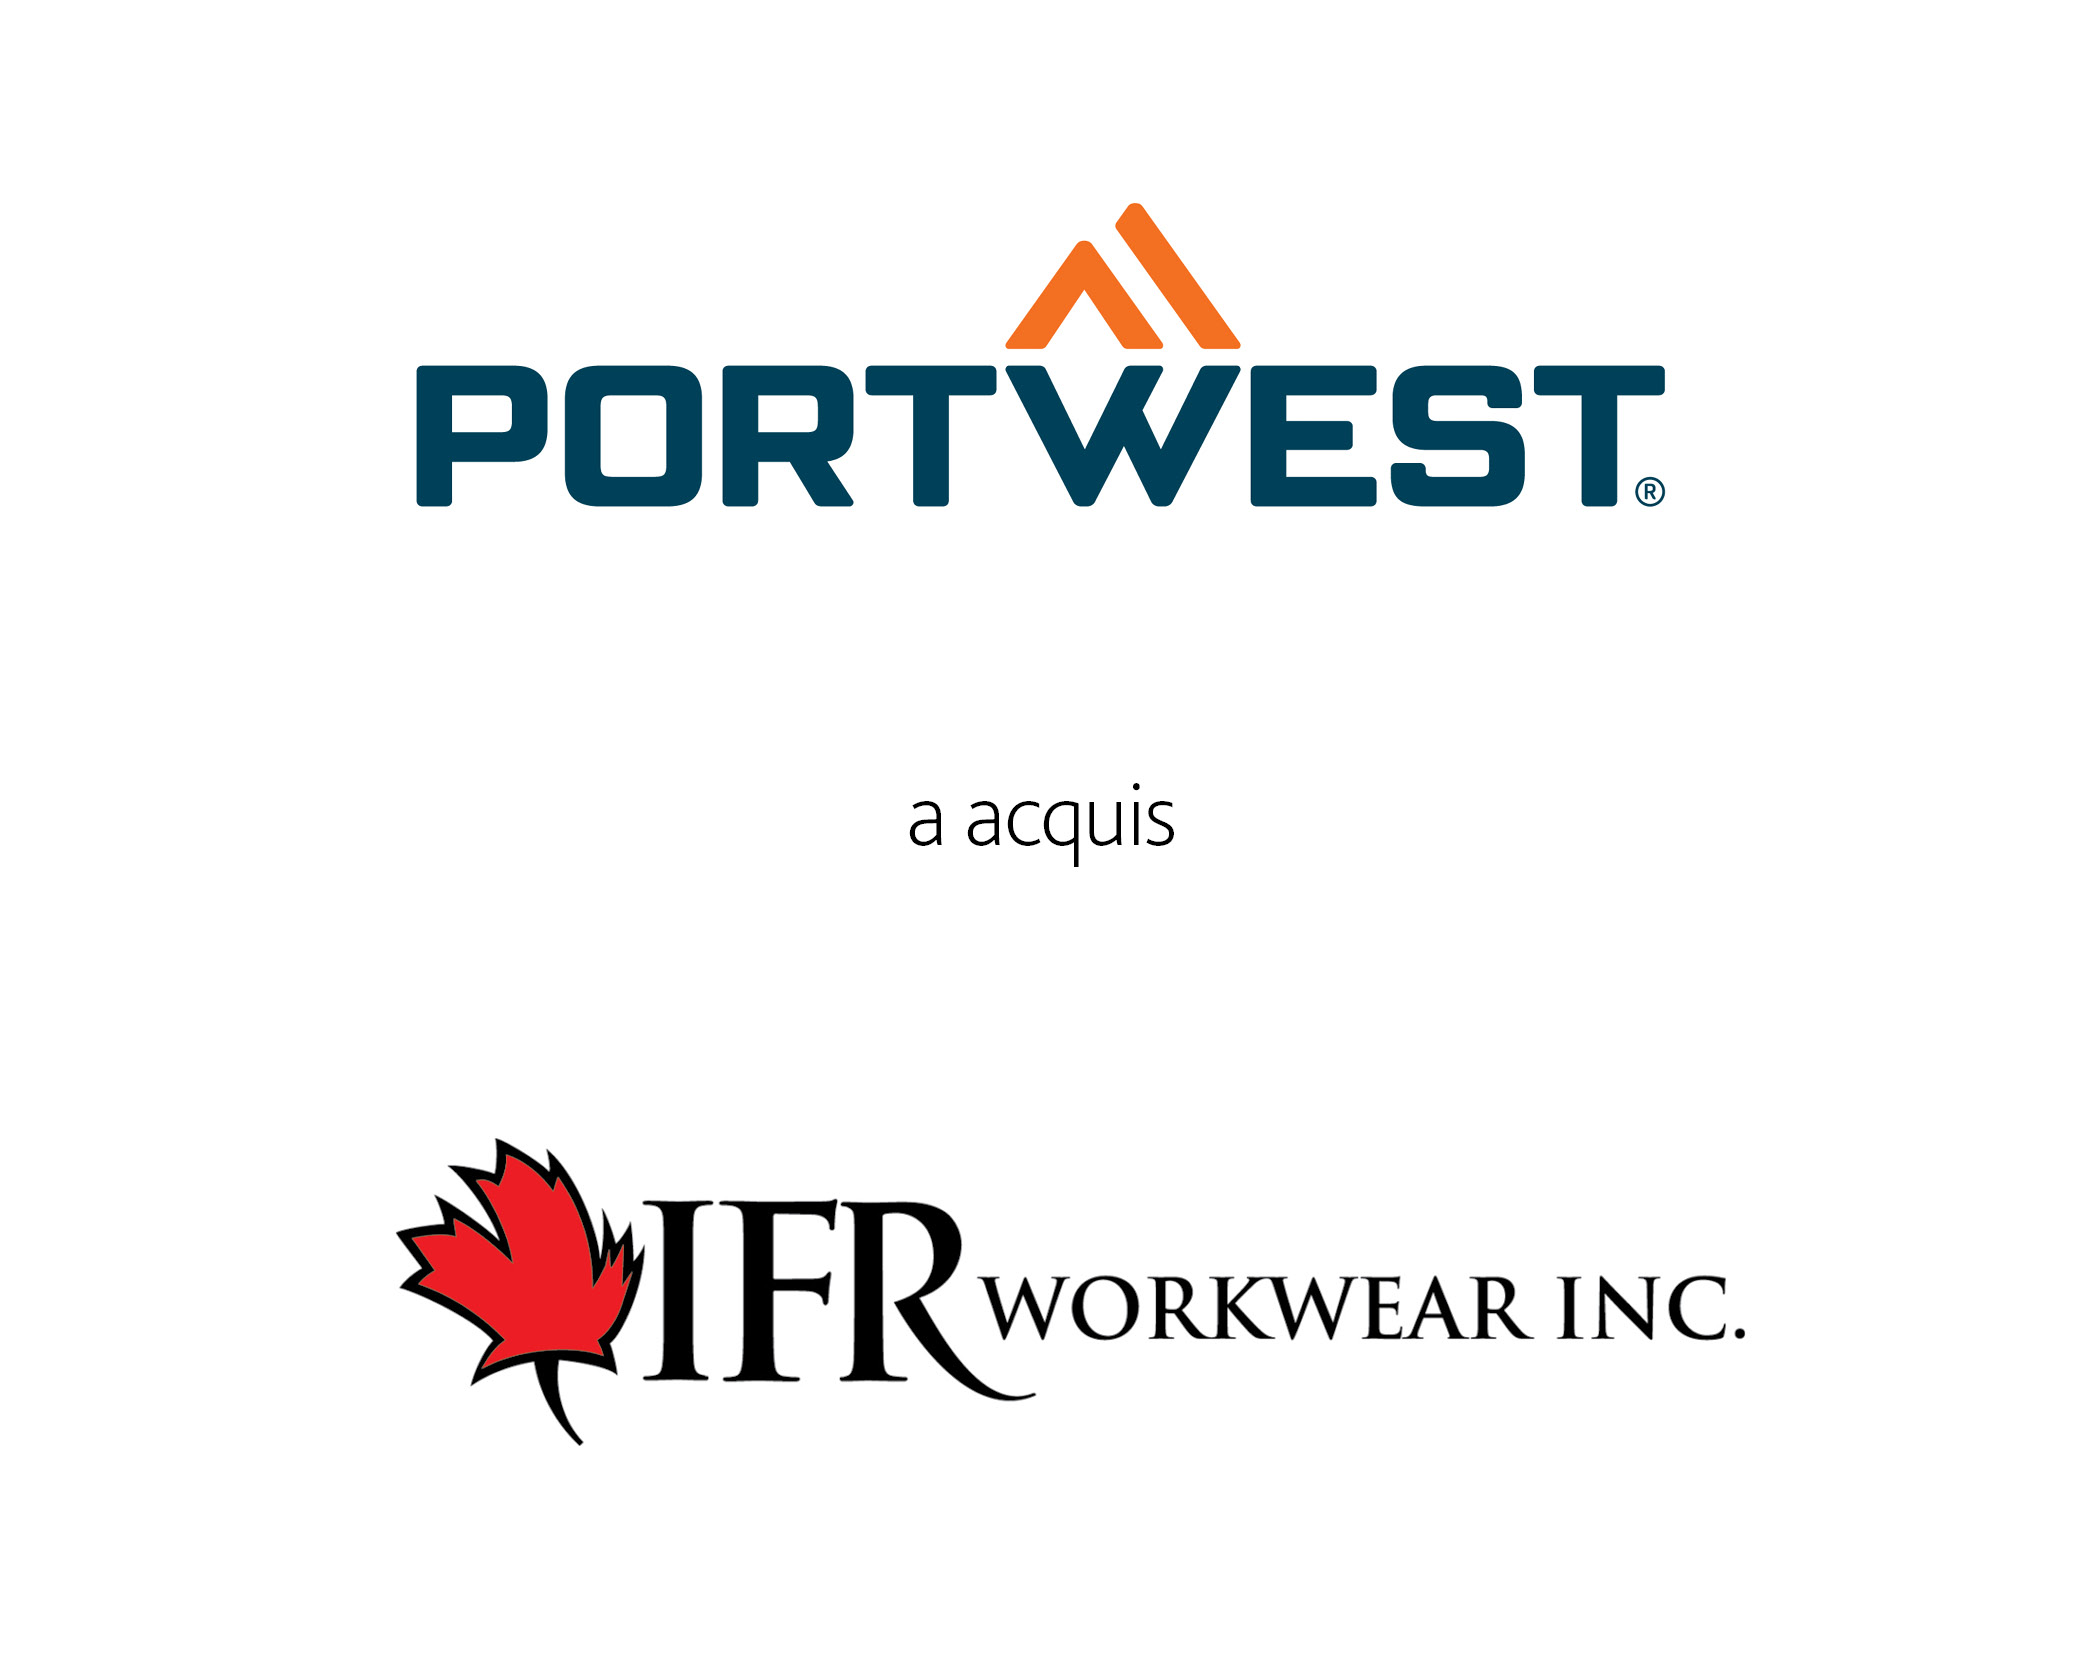 Portwest a acquis IFR Workwear inc.